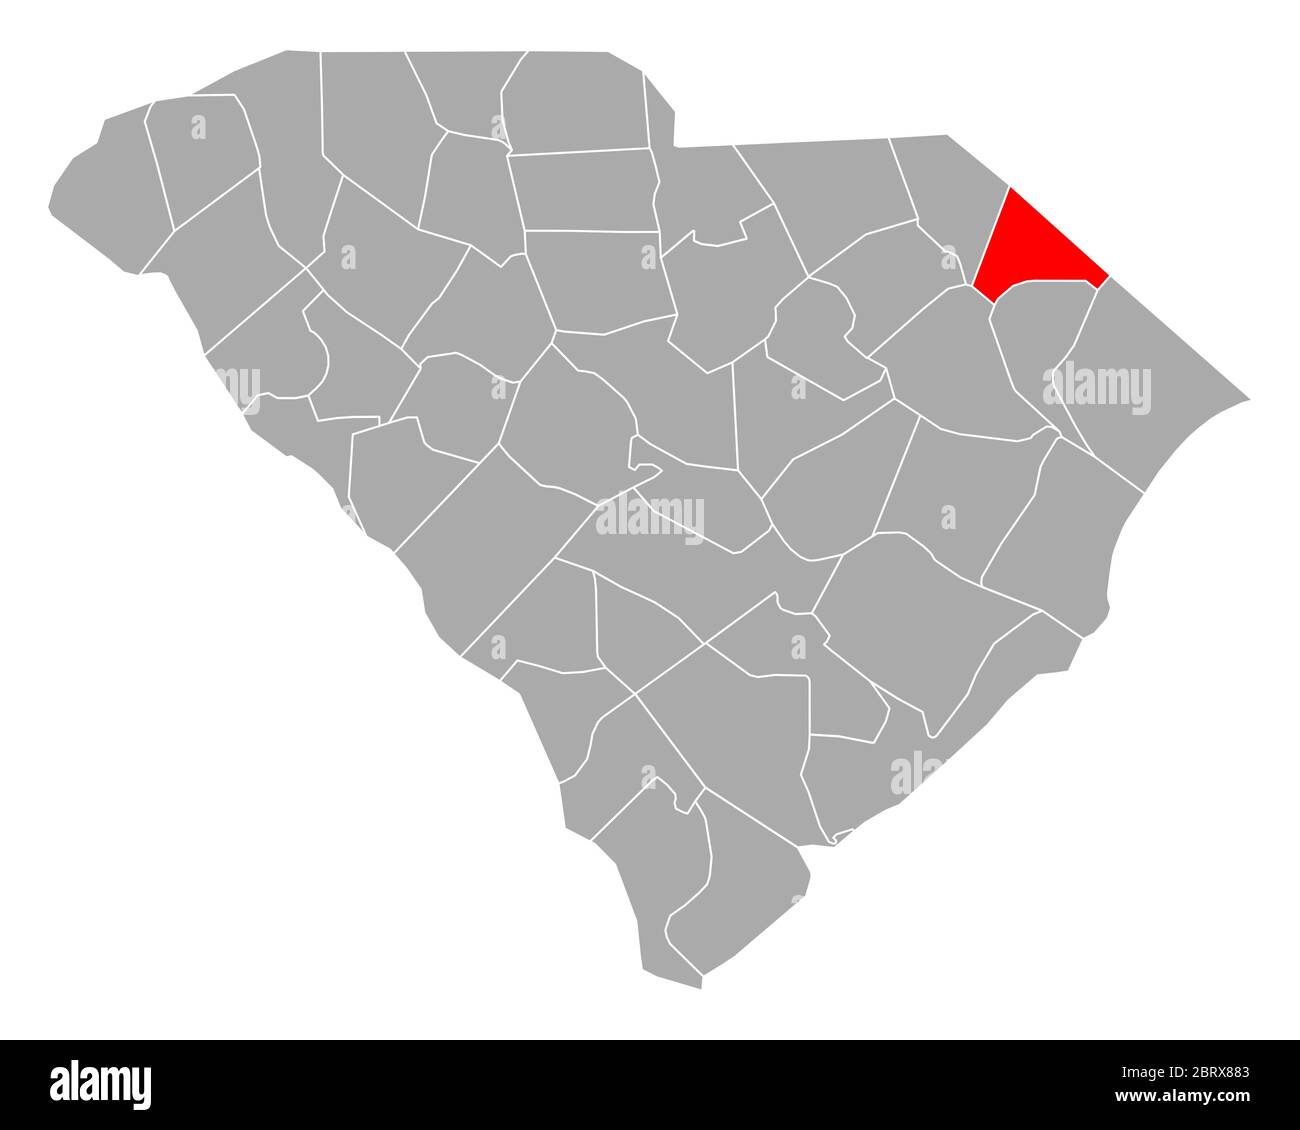 Map Of Dillon In South Carolina 2BRX883 